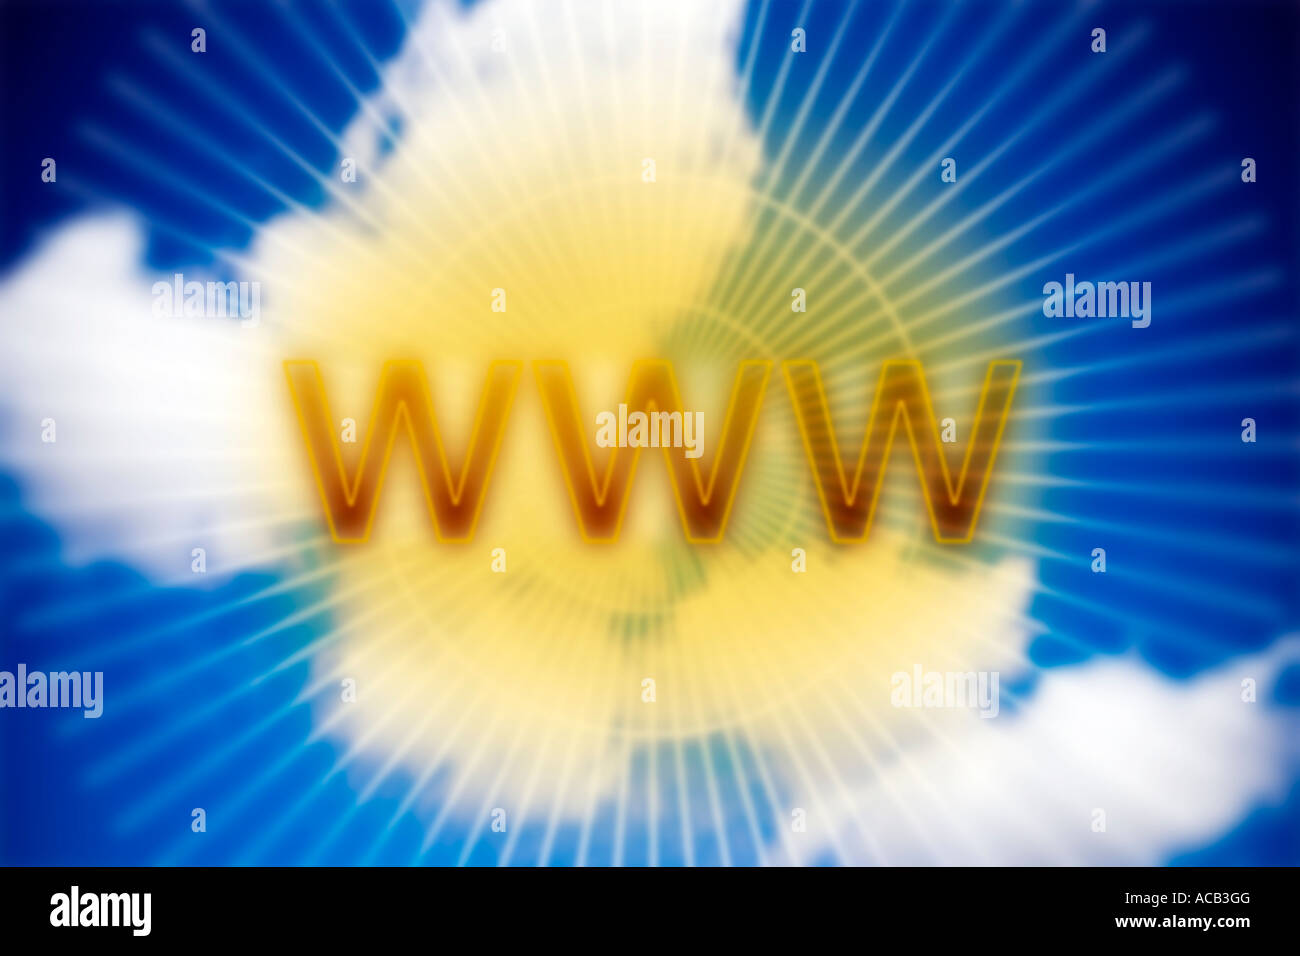 Internet illustration: world wide web Stock Photo